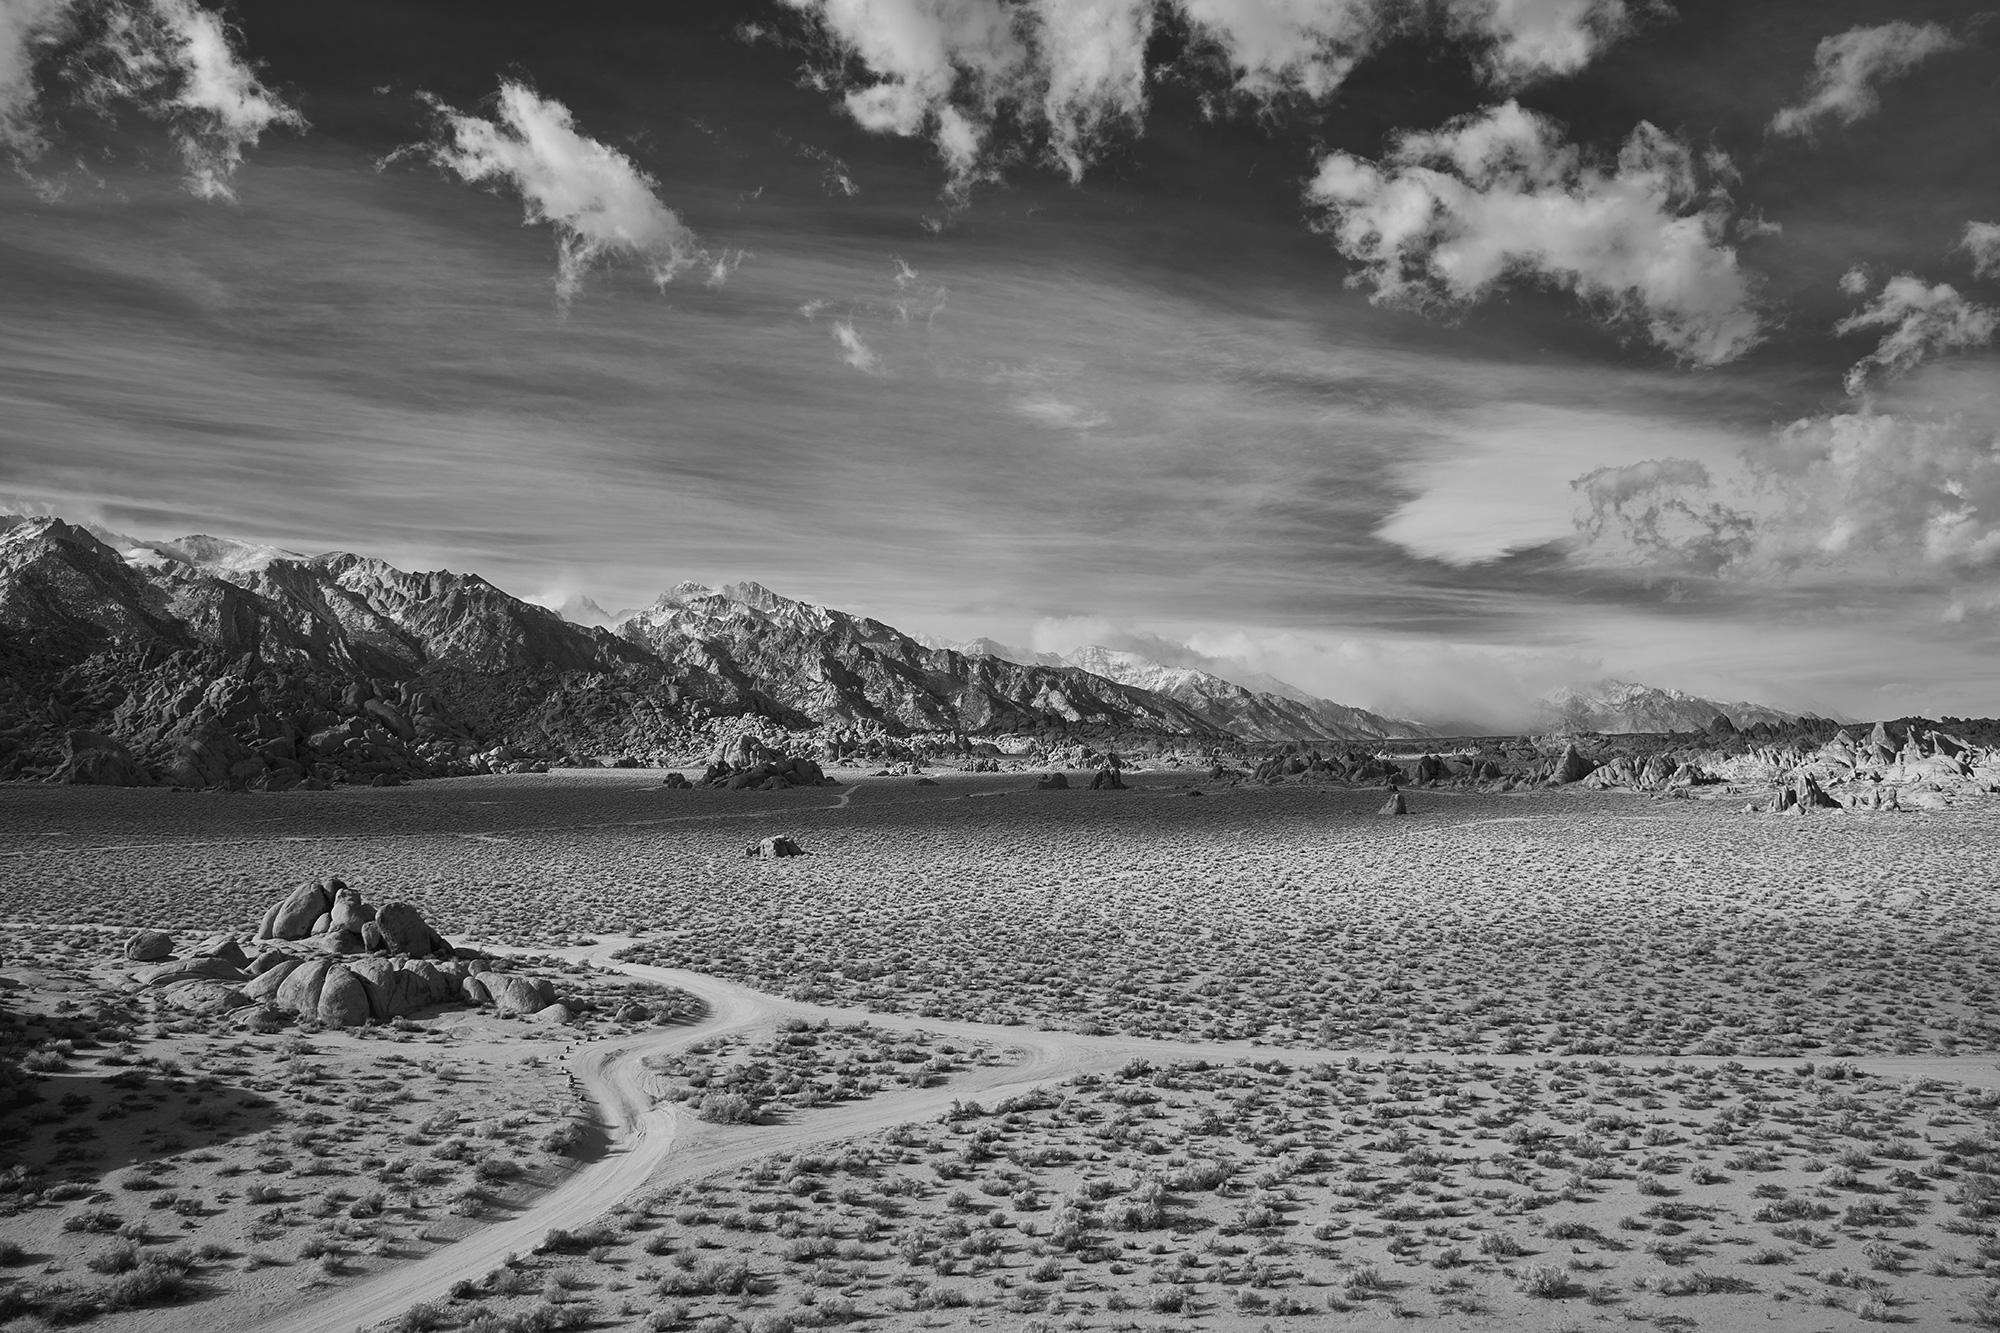 Desert Crossing - large scale photograph of dramatic desert landscape - Photograph by Frank Schott